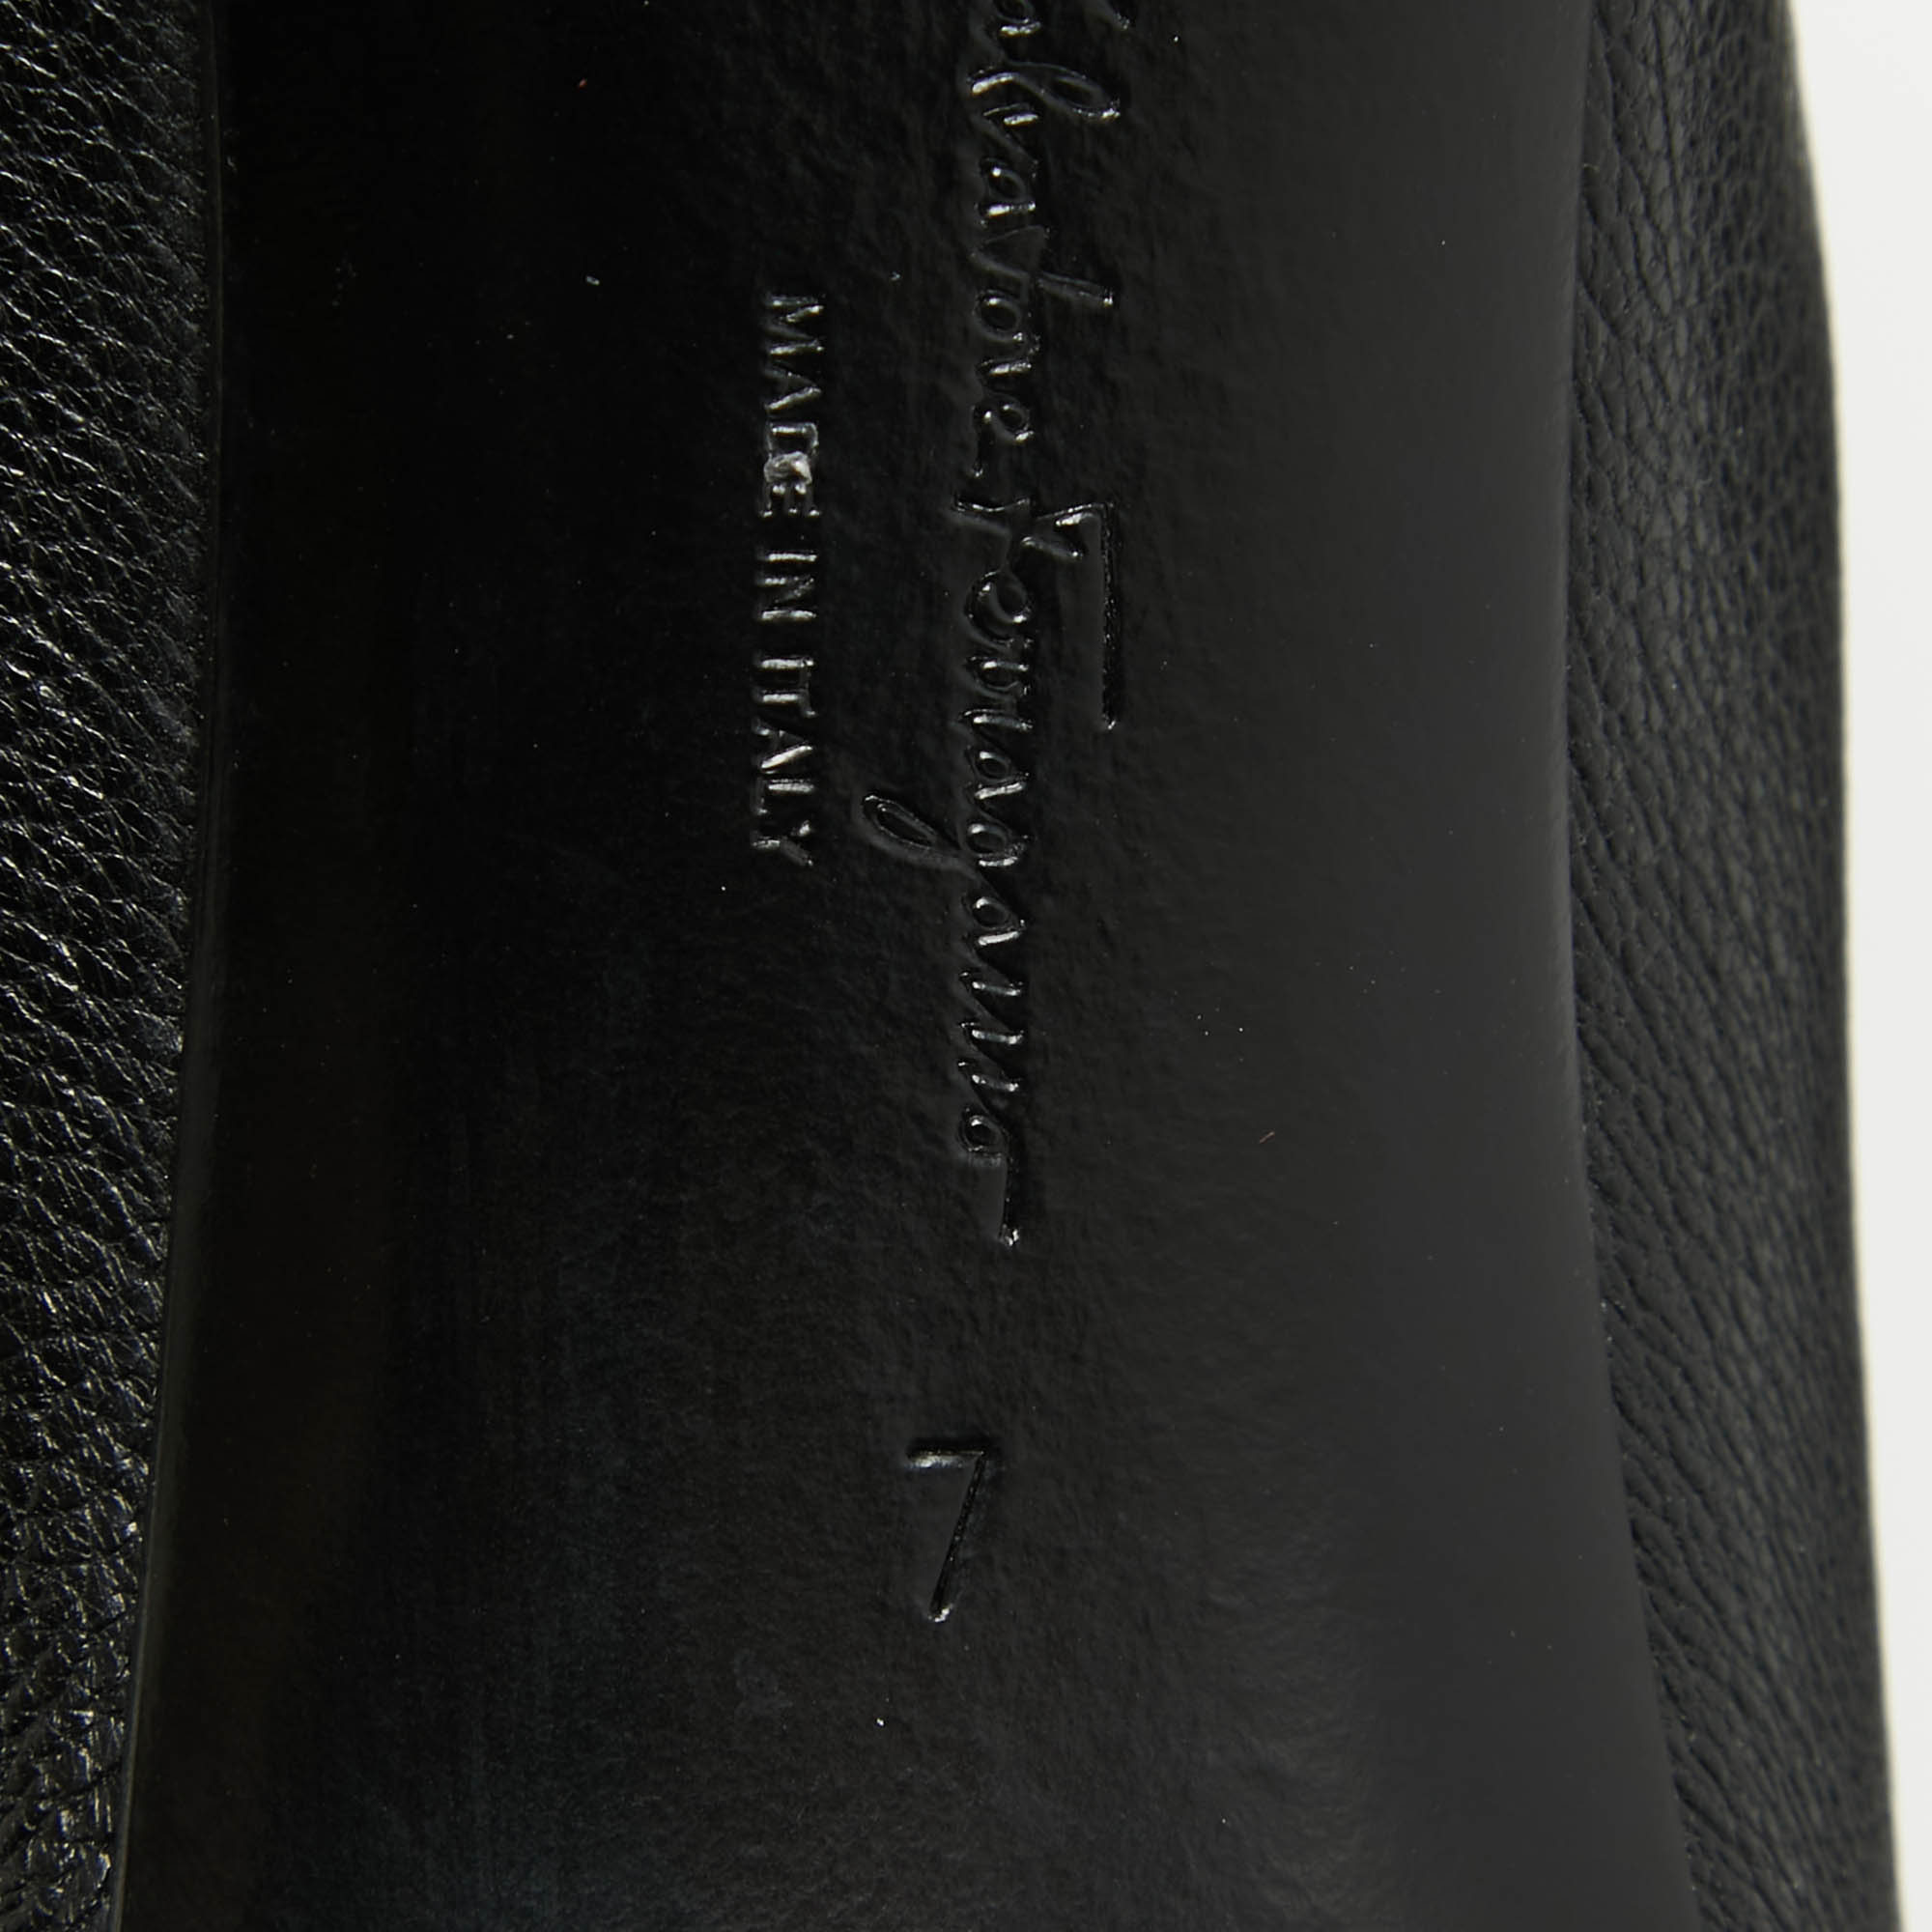 Salvatore Ferragamo Black Leather Bow Pointed Toe Pumps Size 37.5